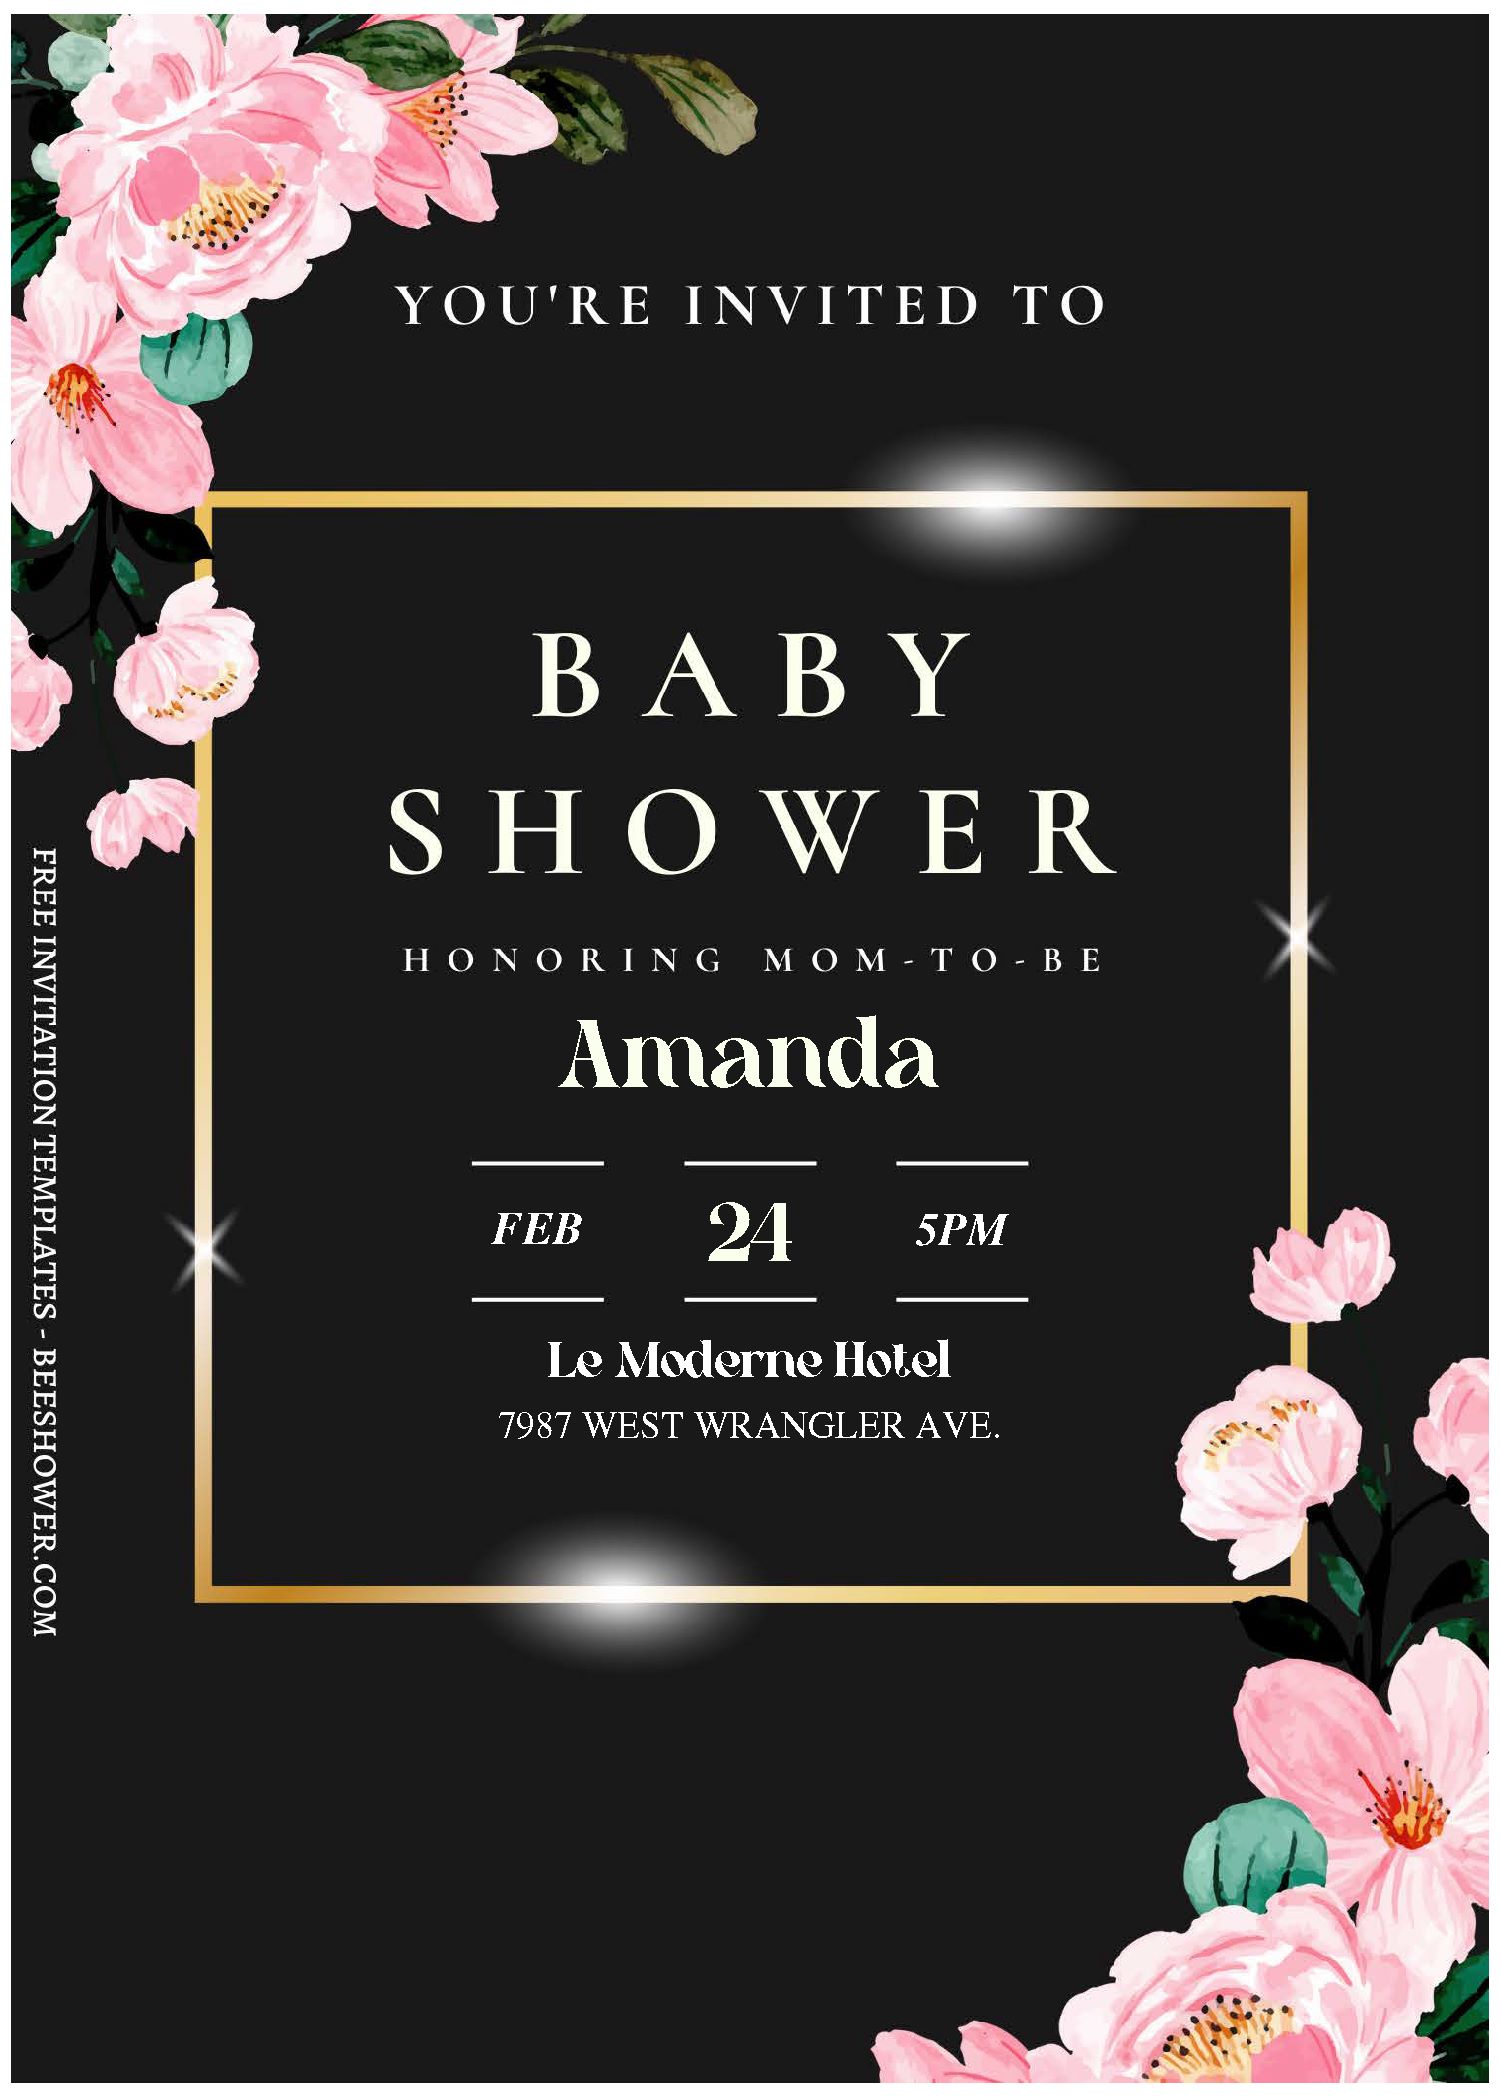 (Free Editable PDF) Shining Gold Frame Floral Baby Shower Invitation Templates I